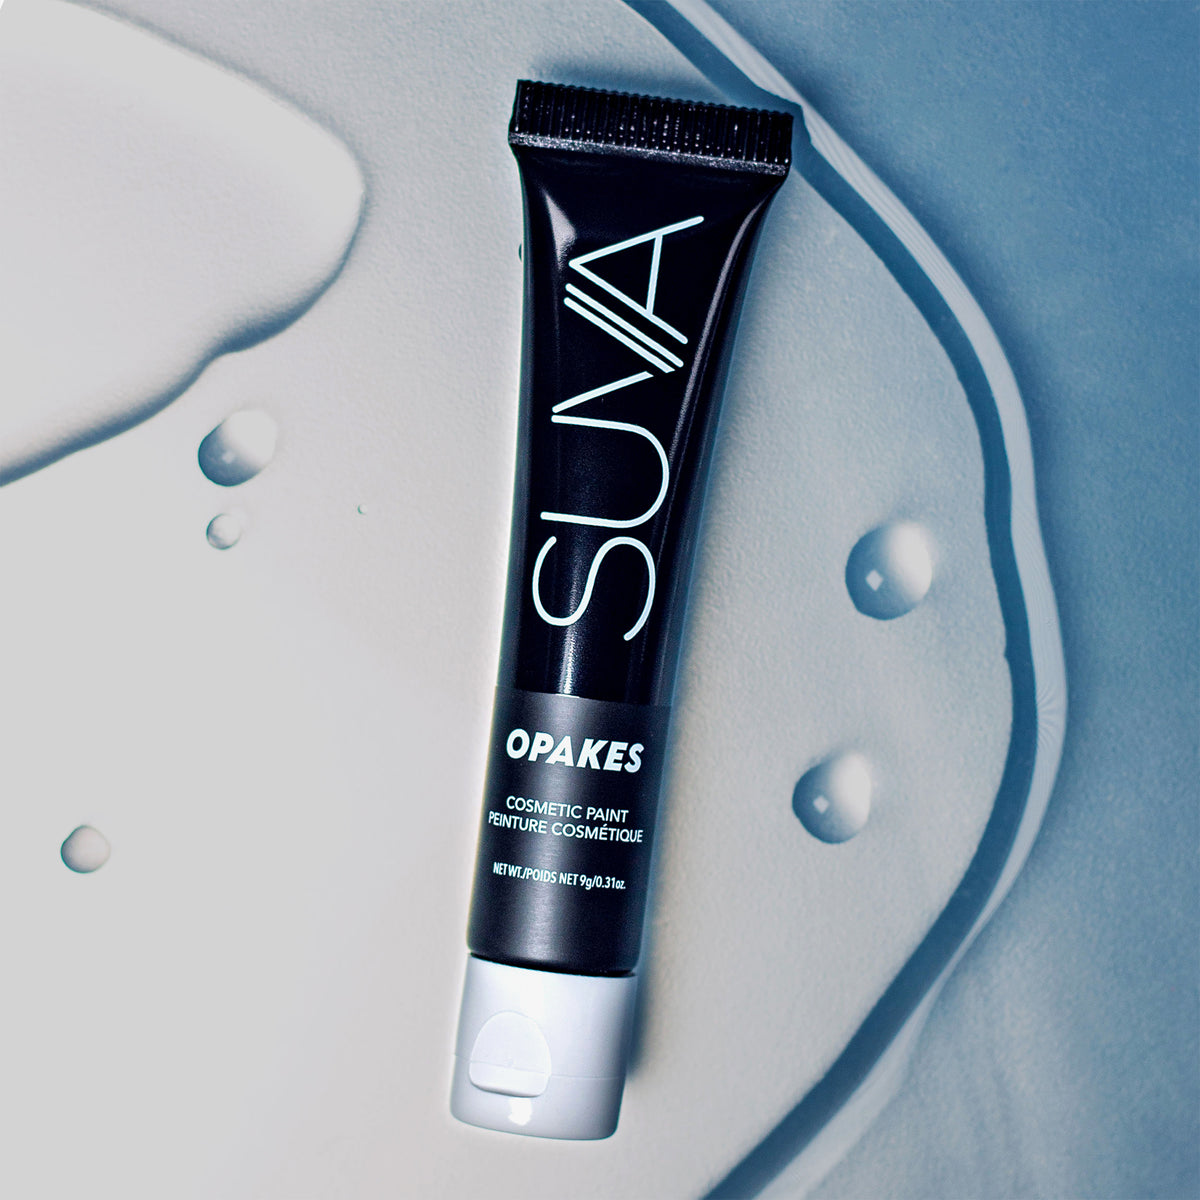 SUVA Beauty | Opakes Cosmetic Paint Bamboozled Black